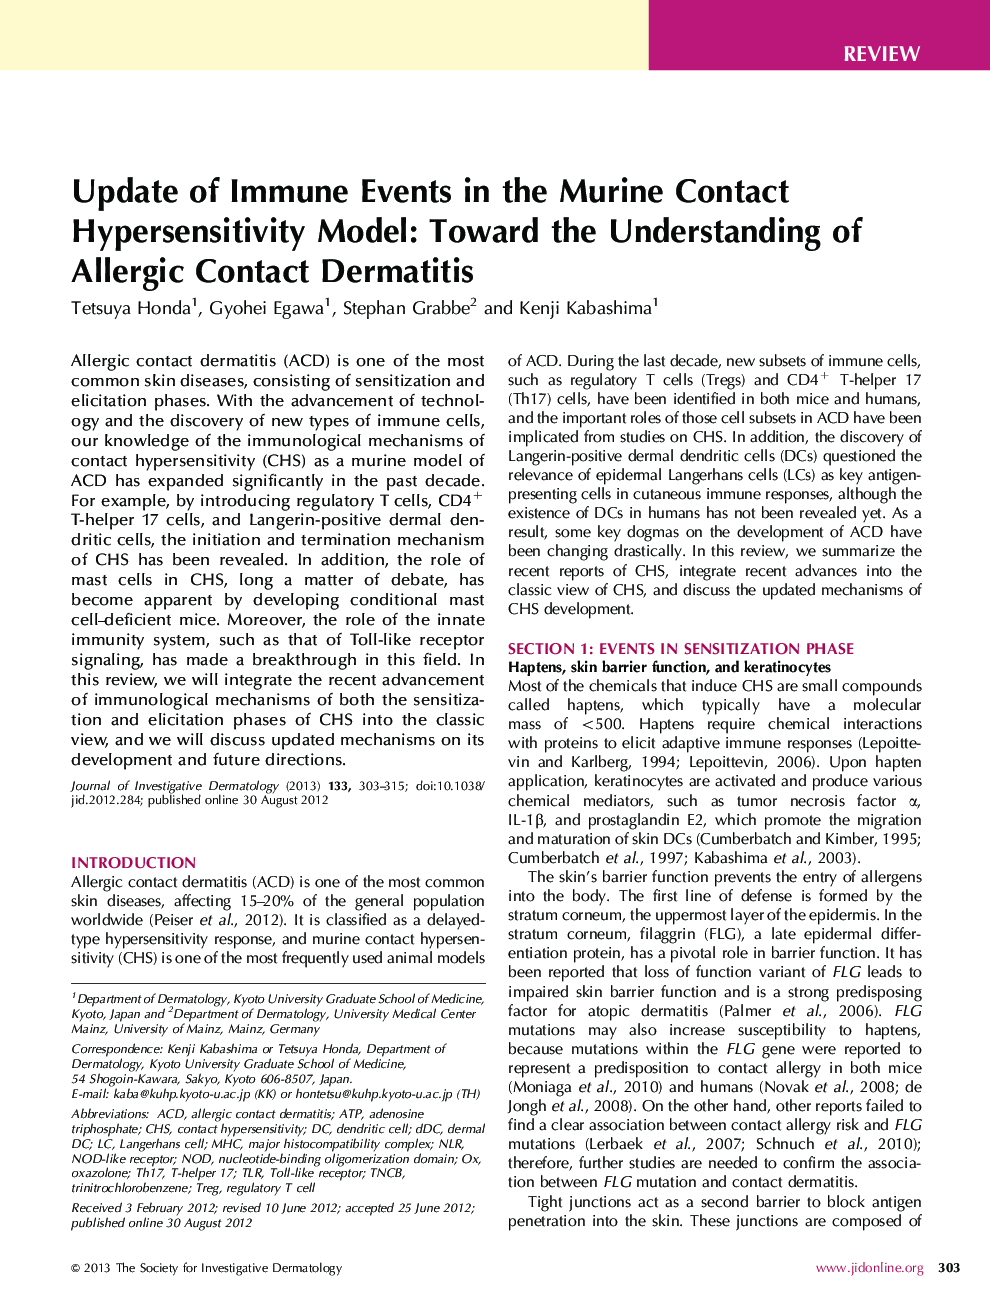 Update of Immune Events in the Murine Contact Hypersensitivity Model: Toward the Understanding of Allergic Contact Dermatitis